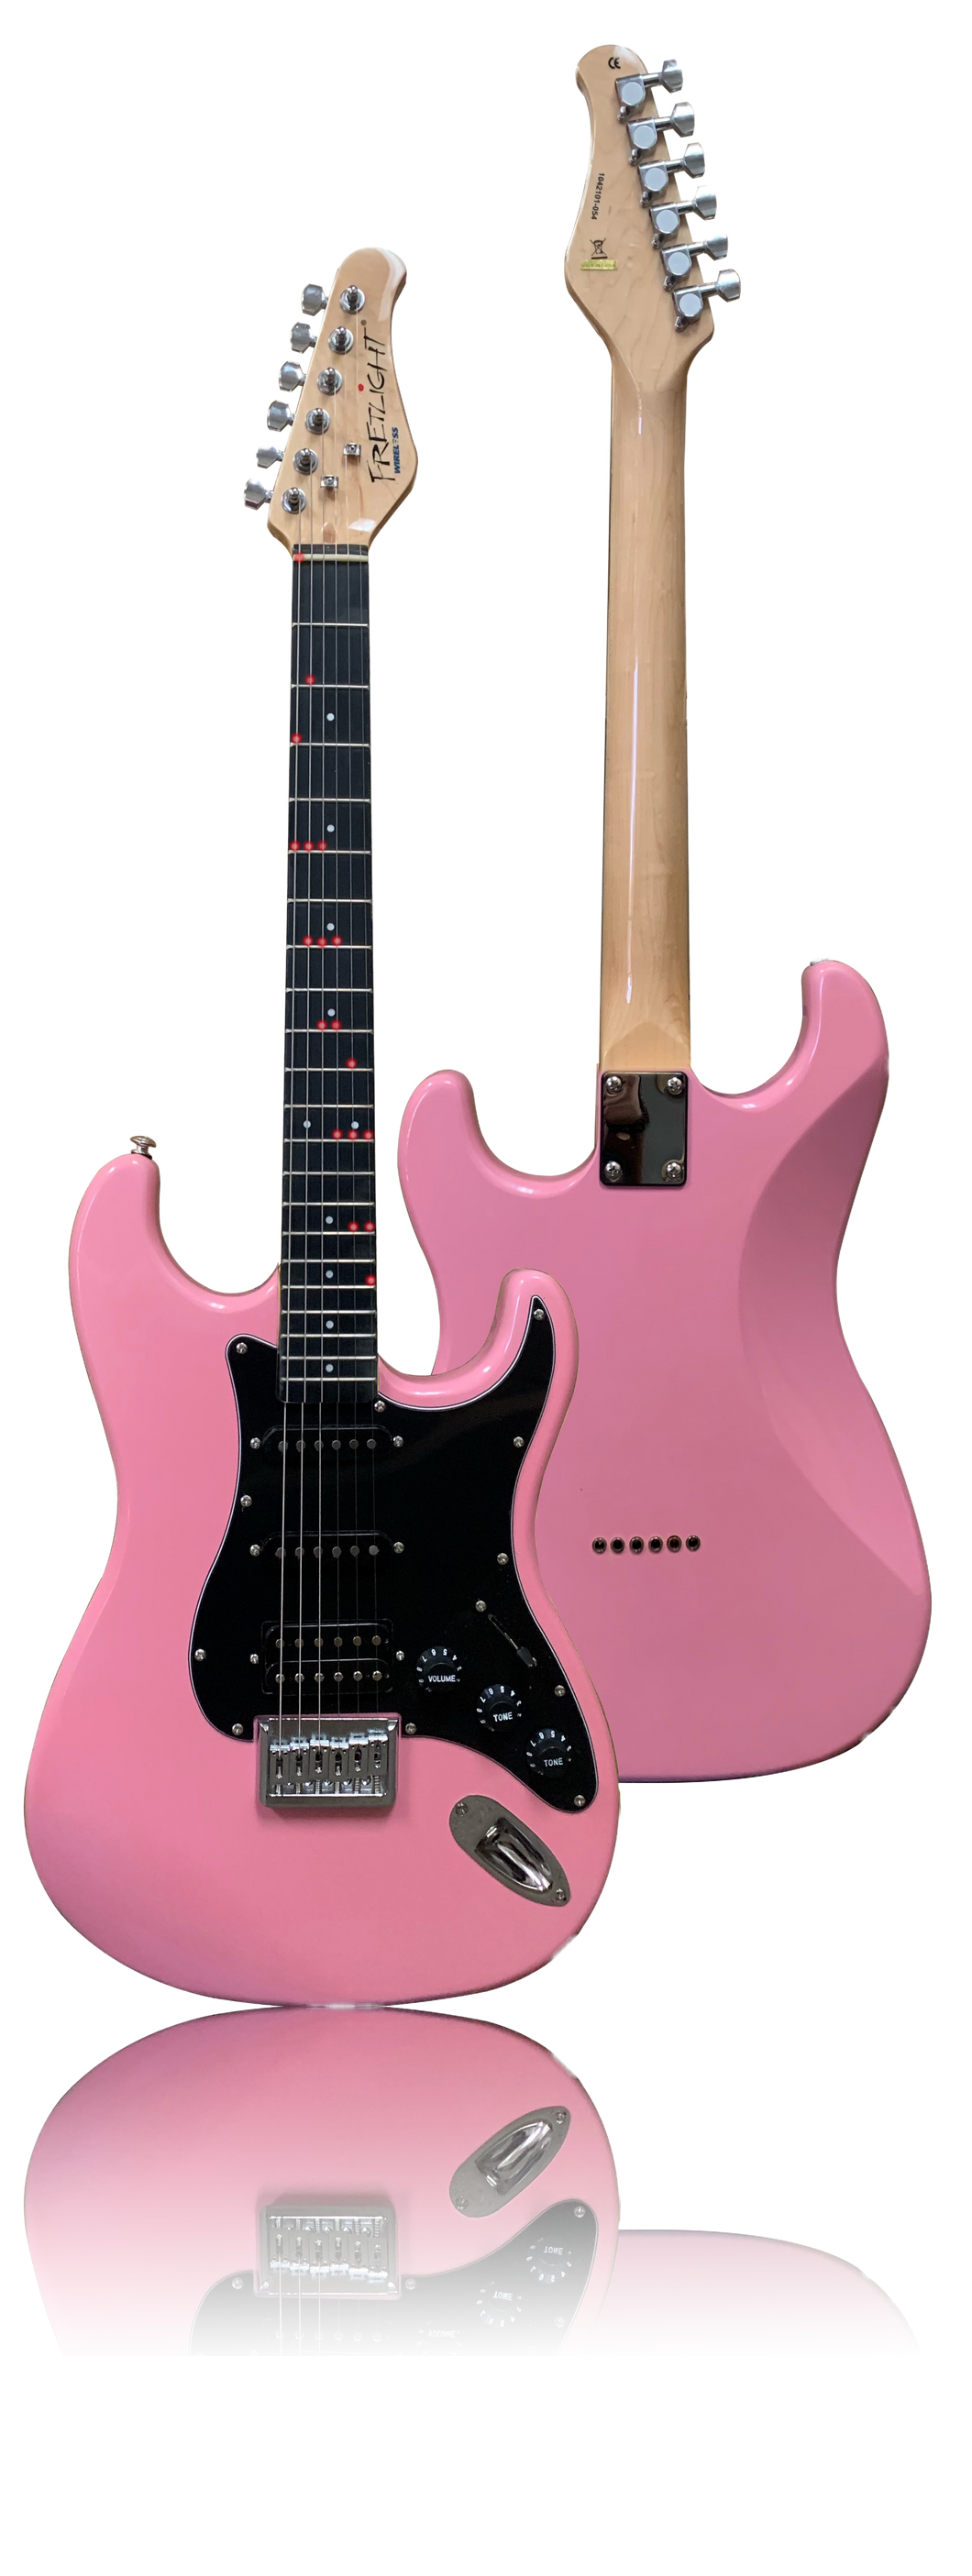 FG-621 Custom Shell Pink with Black Pickguard